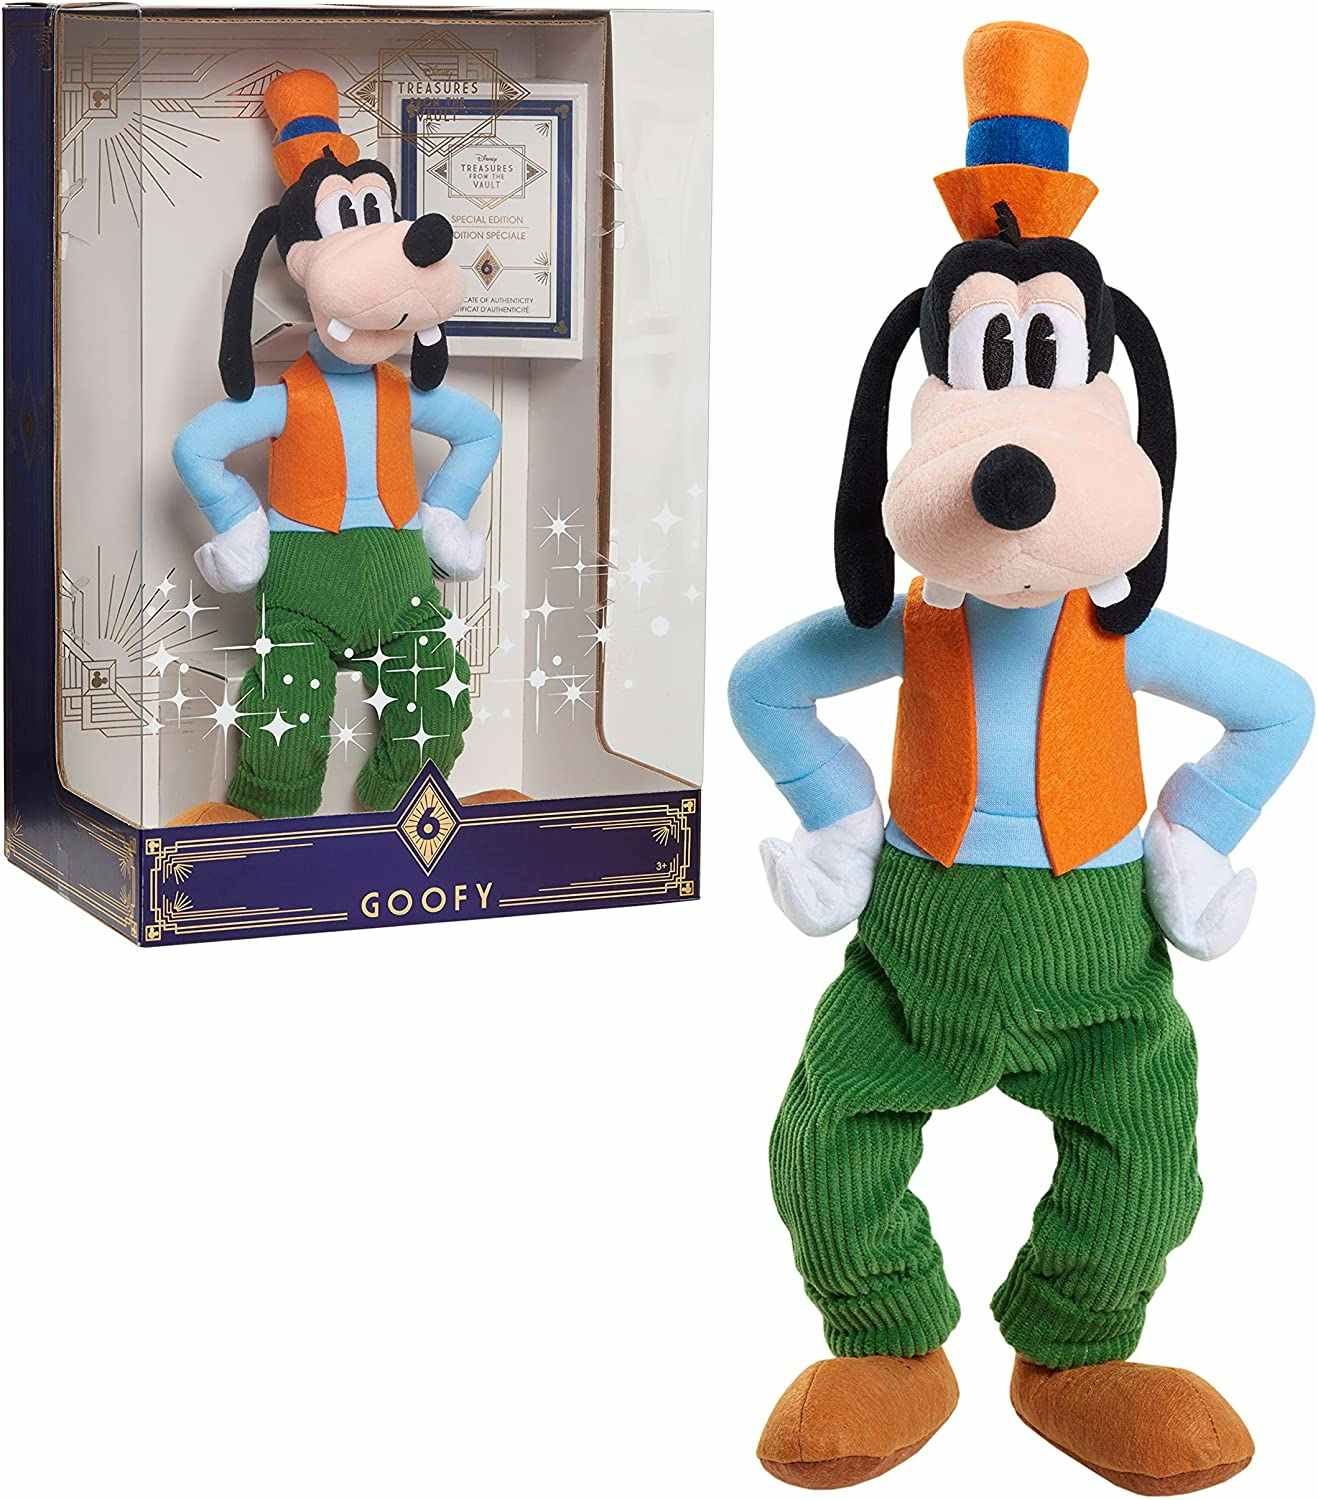 A Goofy Disney plush.